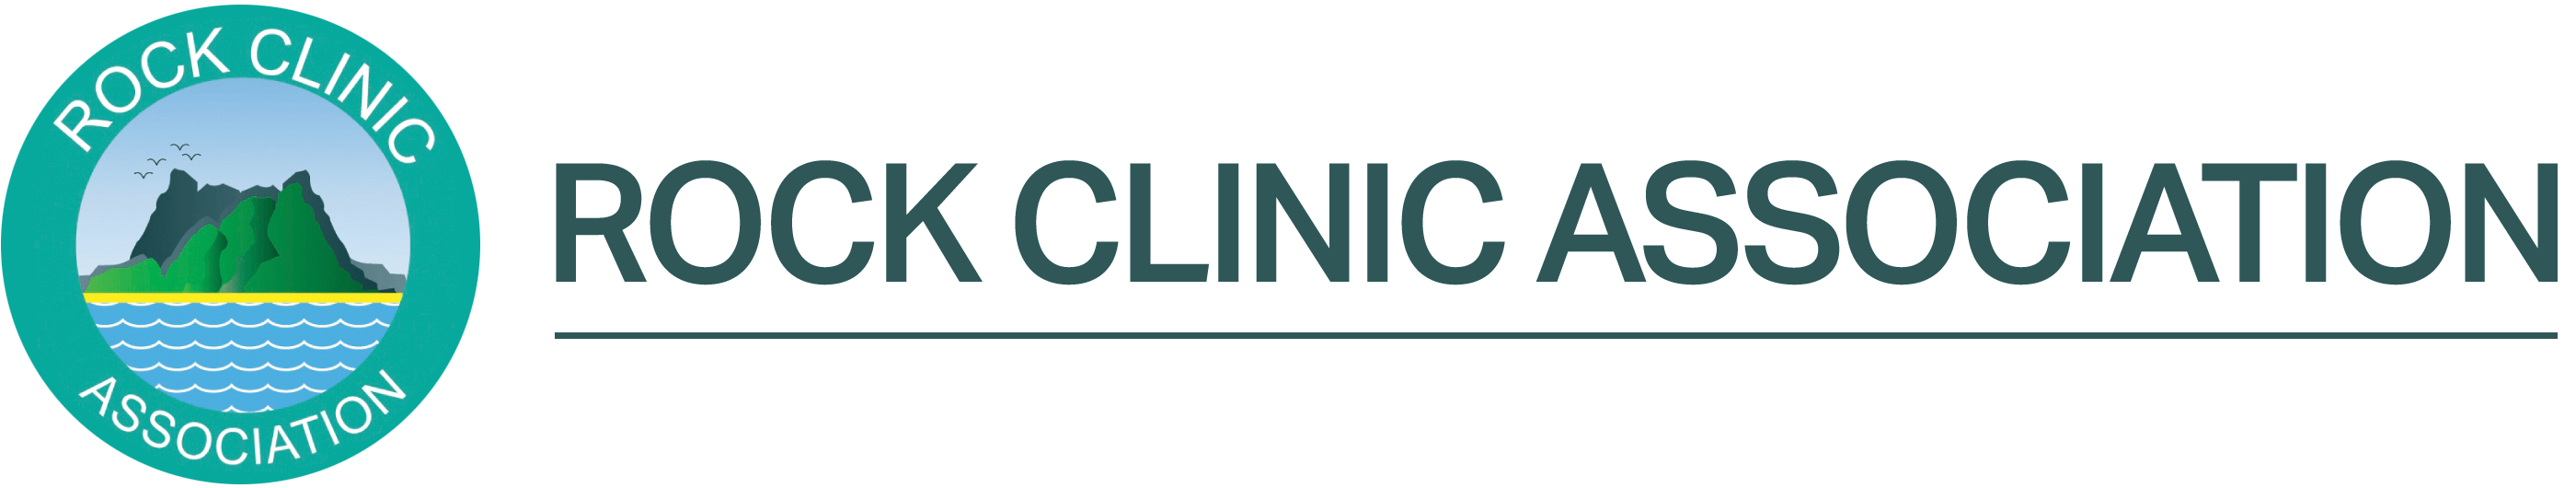 The Rock Clinic Association